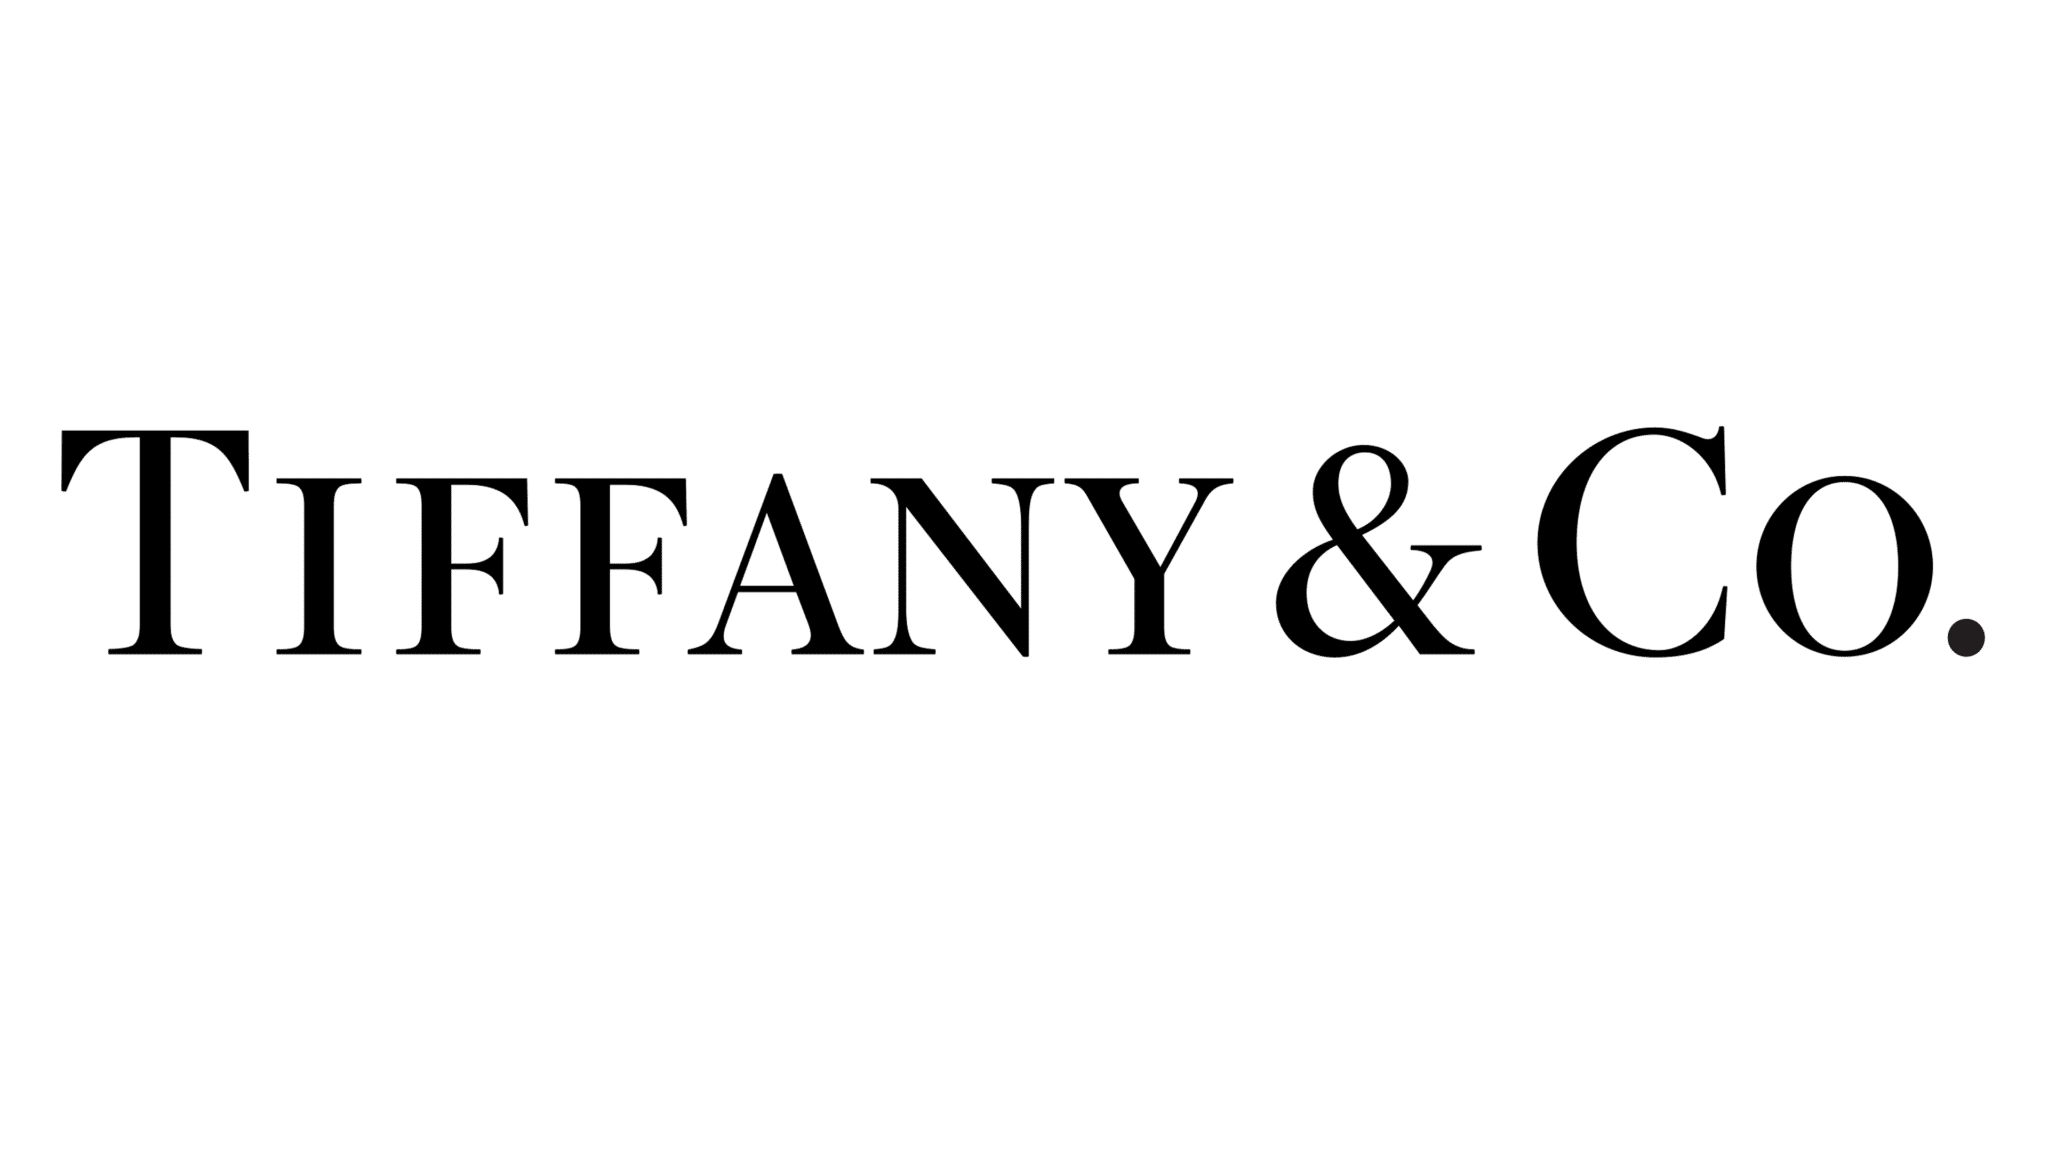 Image de marque partenariat affiliation - Tiffany and co